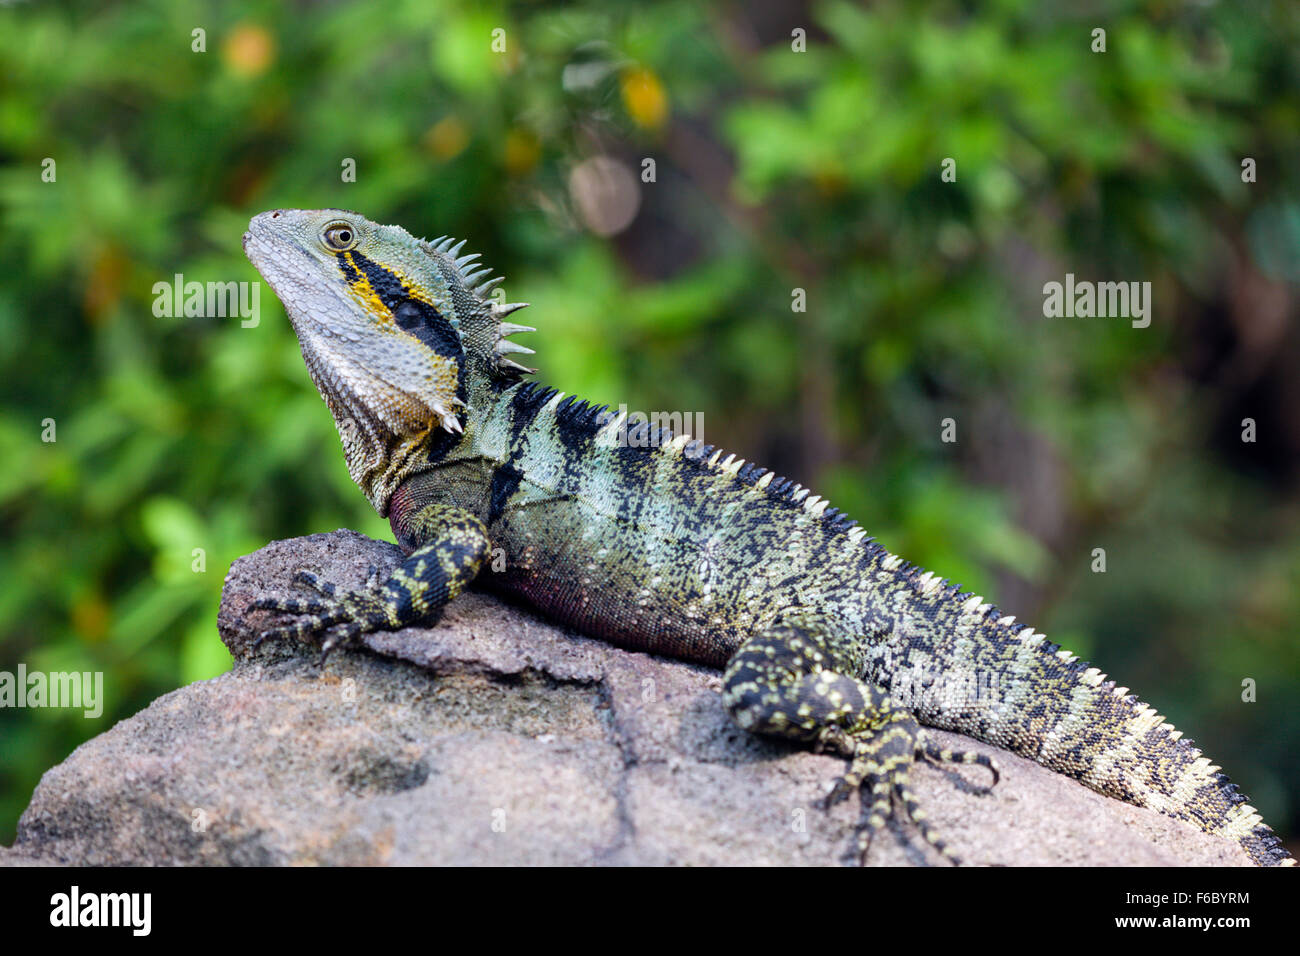 Eastern Australian Water Dragon, Physignathus lesueurii lesueurii, Queensland, Australia Stock Photo